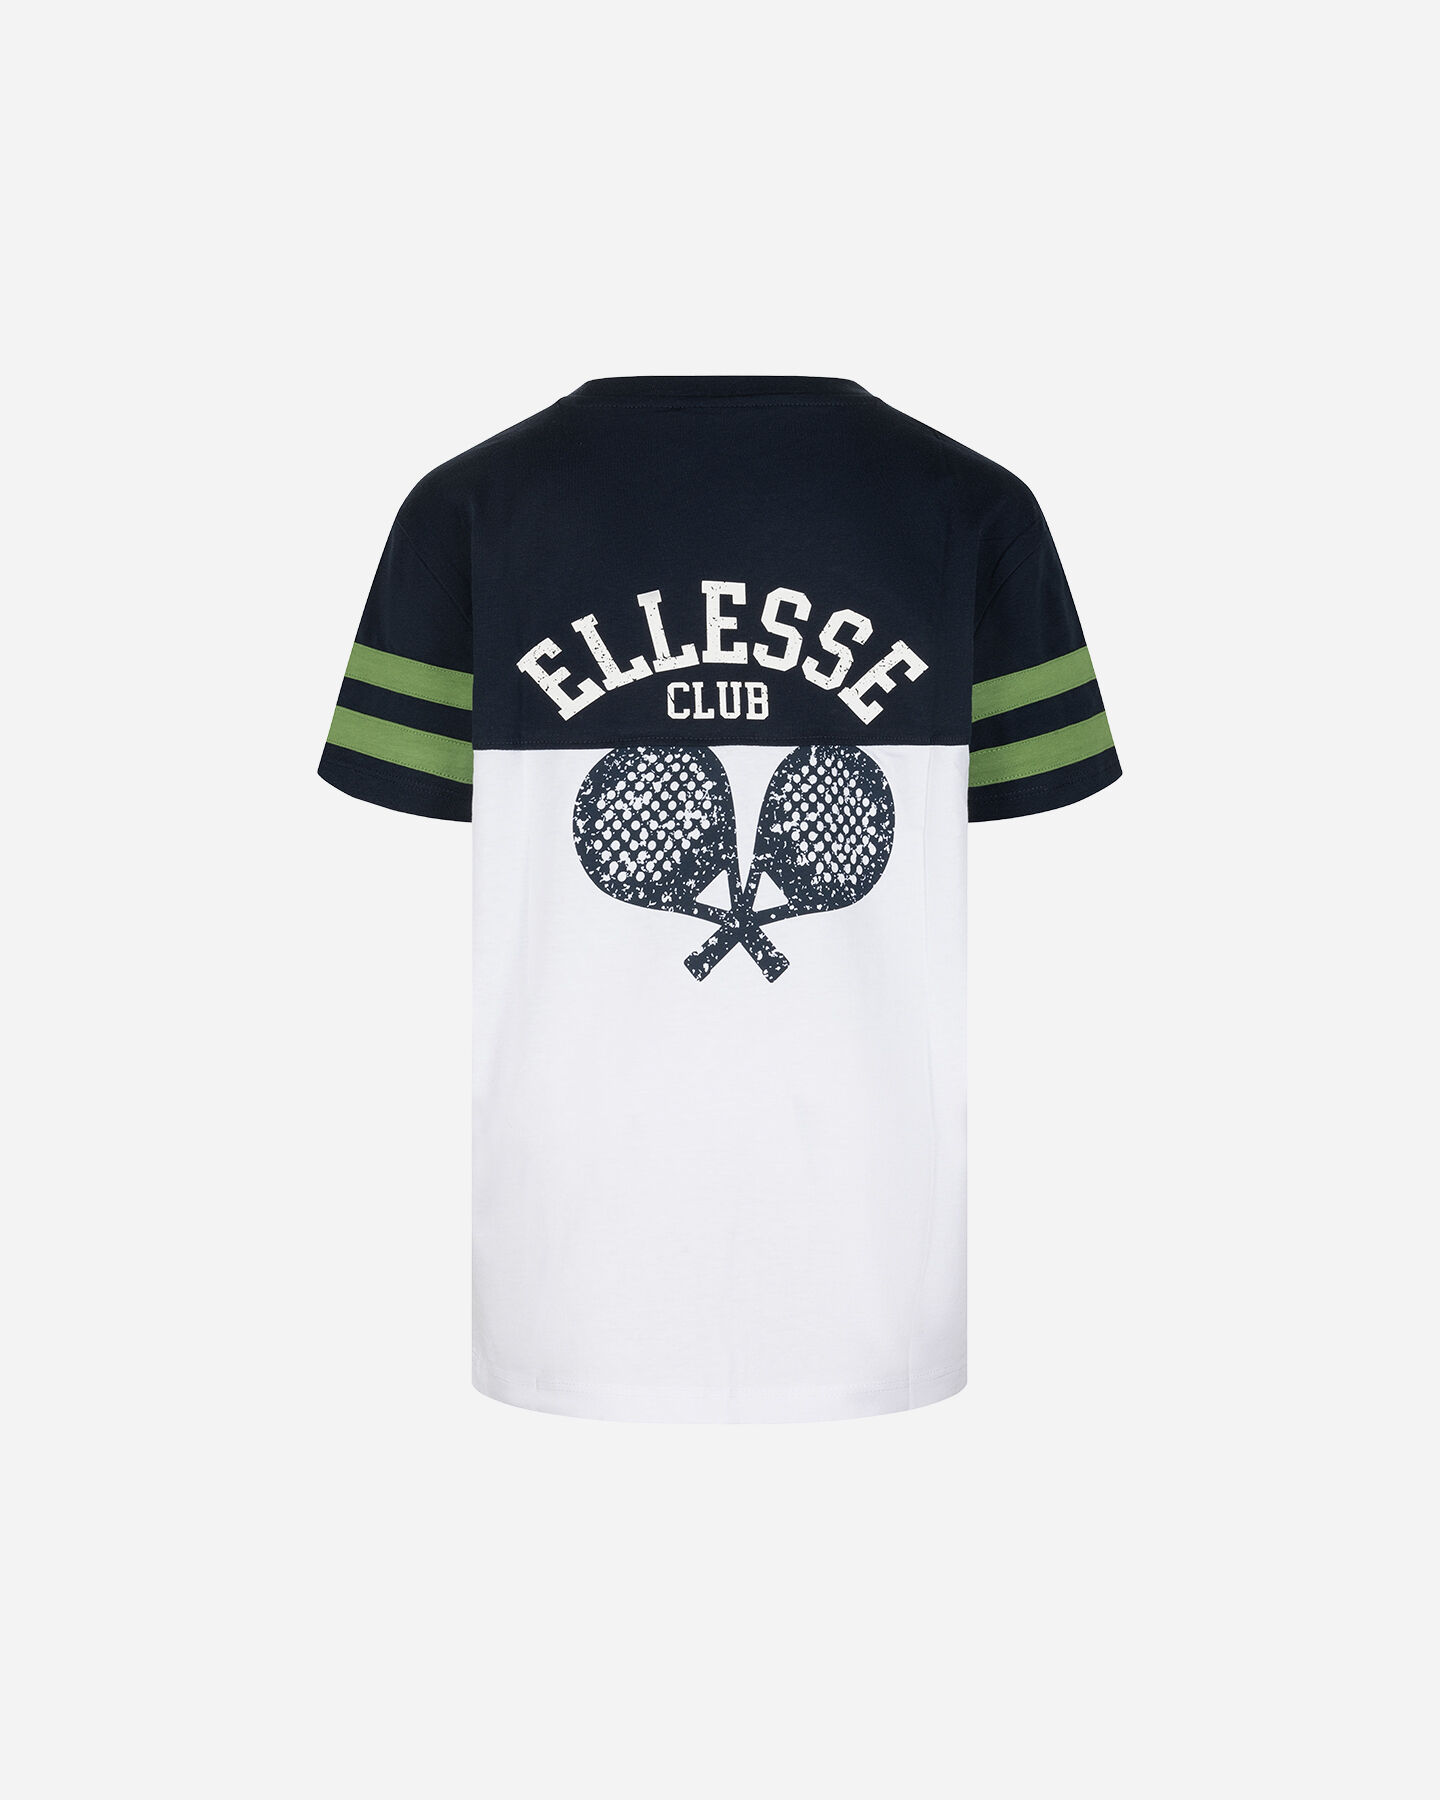  T-Shirt ELLESSE COMMUNITY CLUB JR S4130182|001A|8A scatto 1